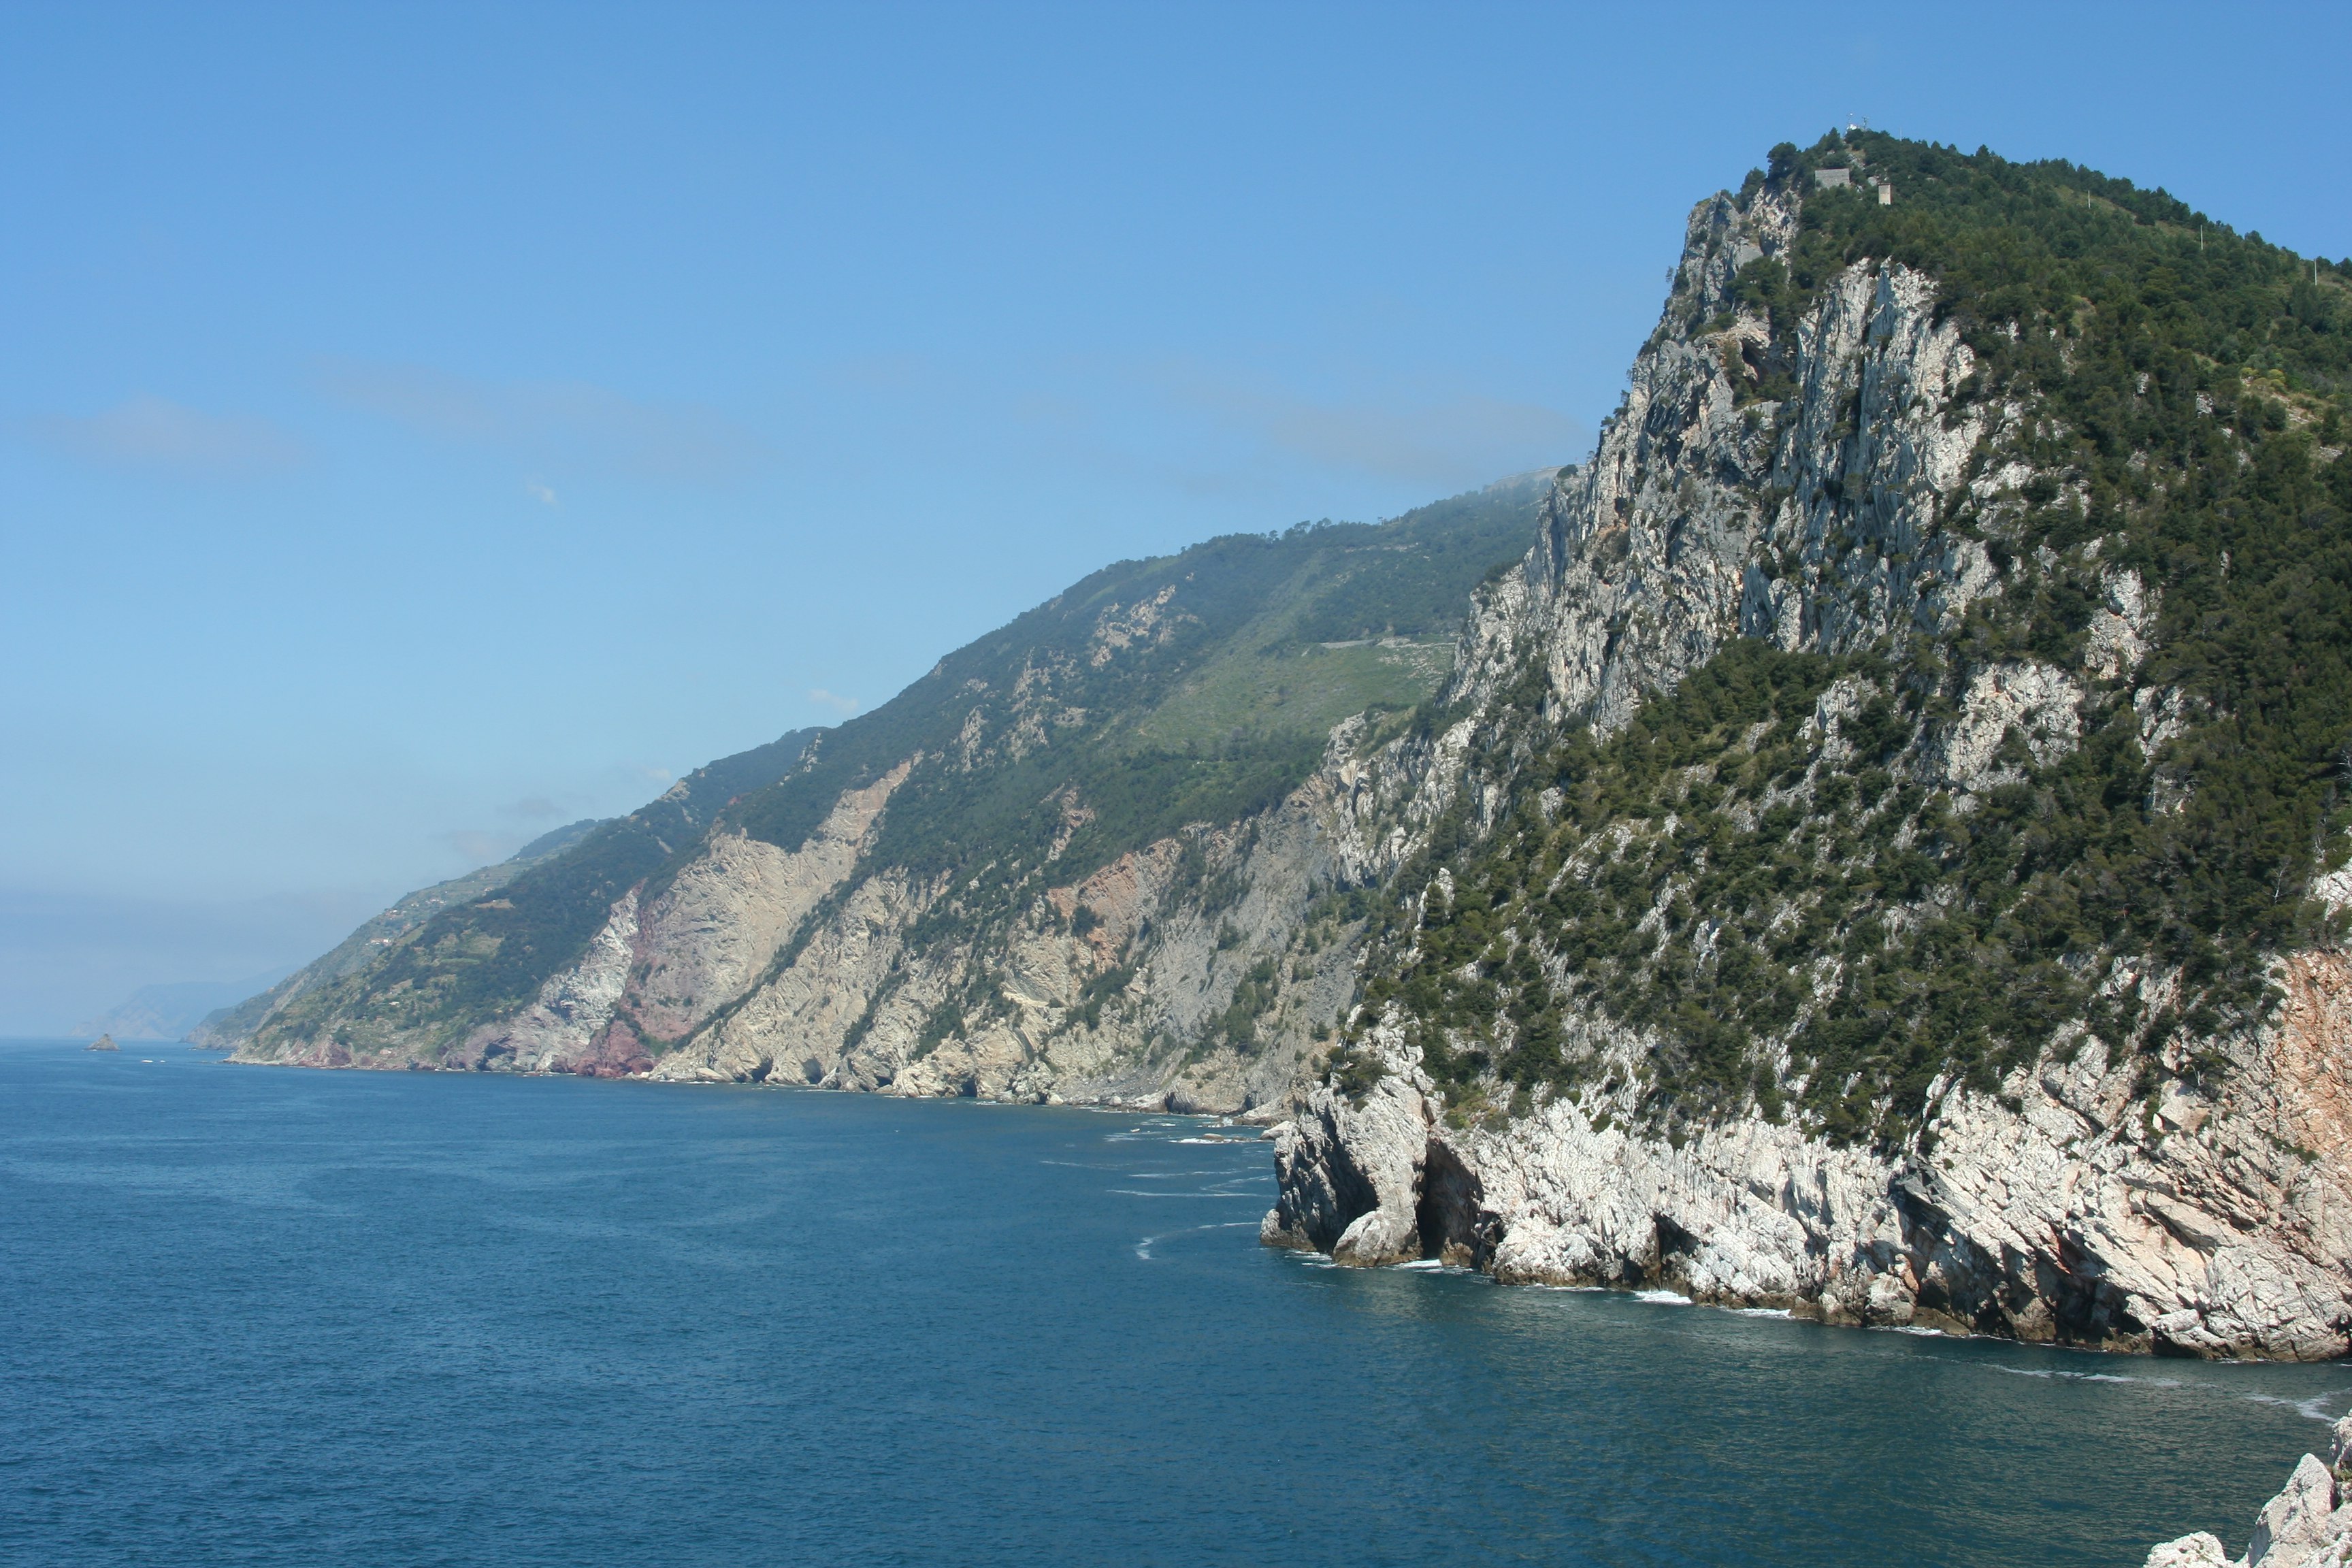 The coast near the Cinqueterre, Italy